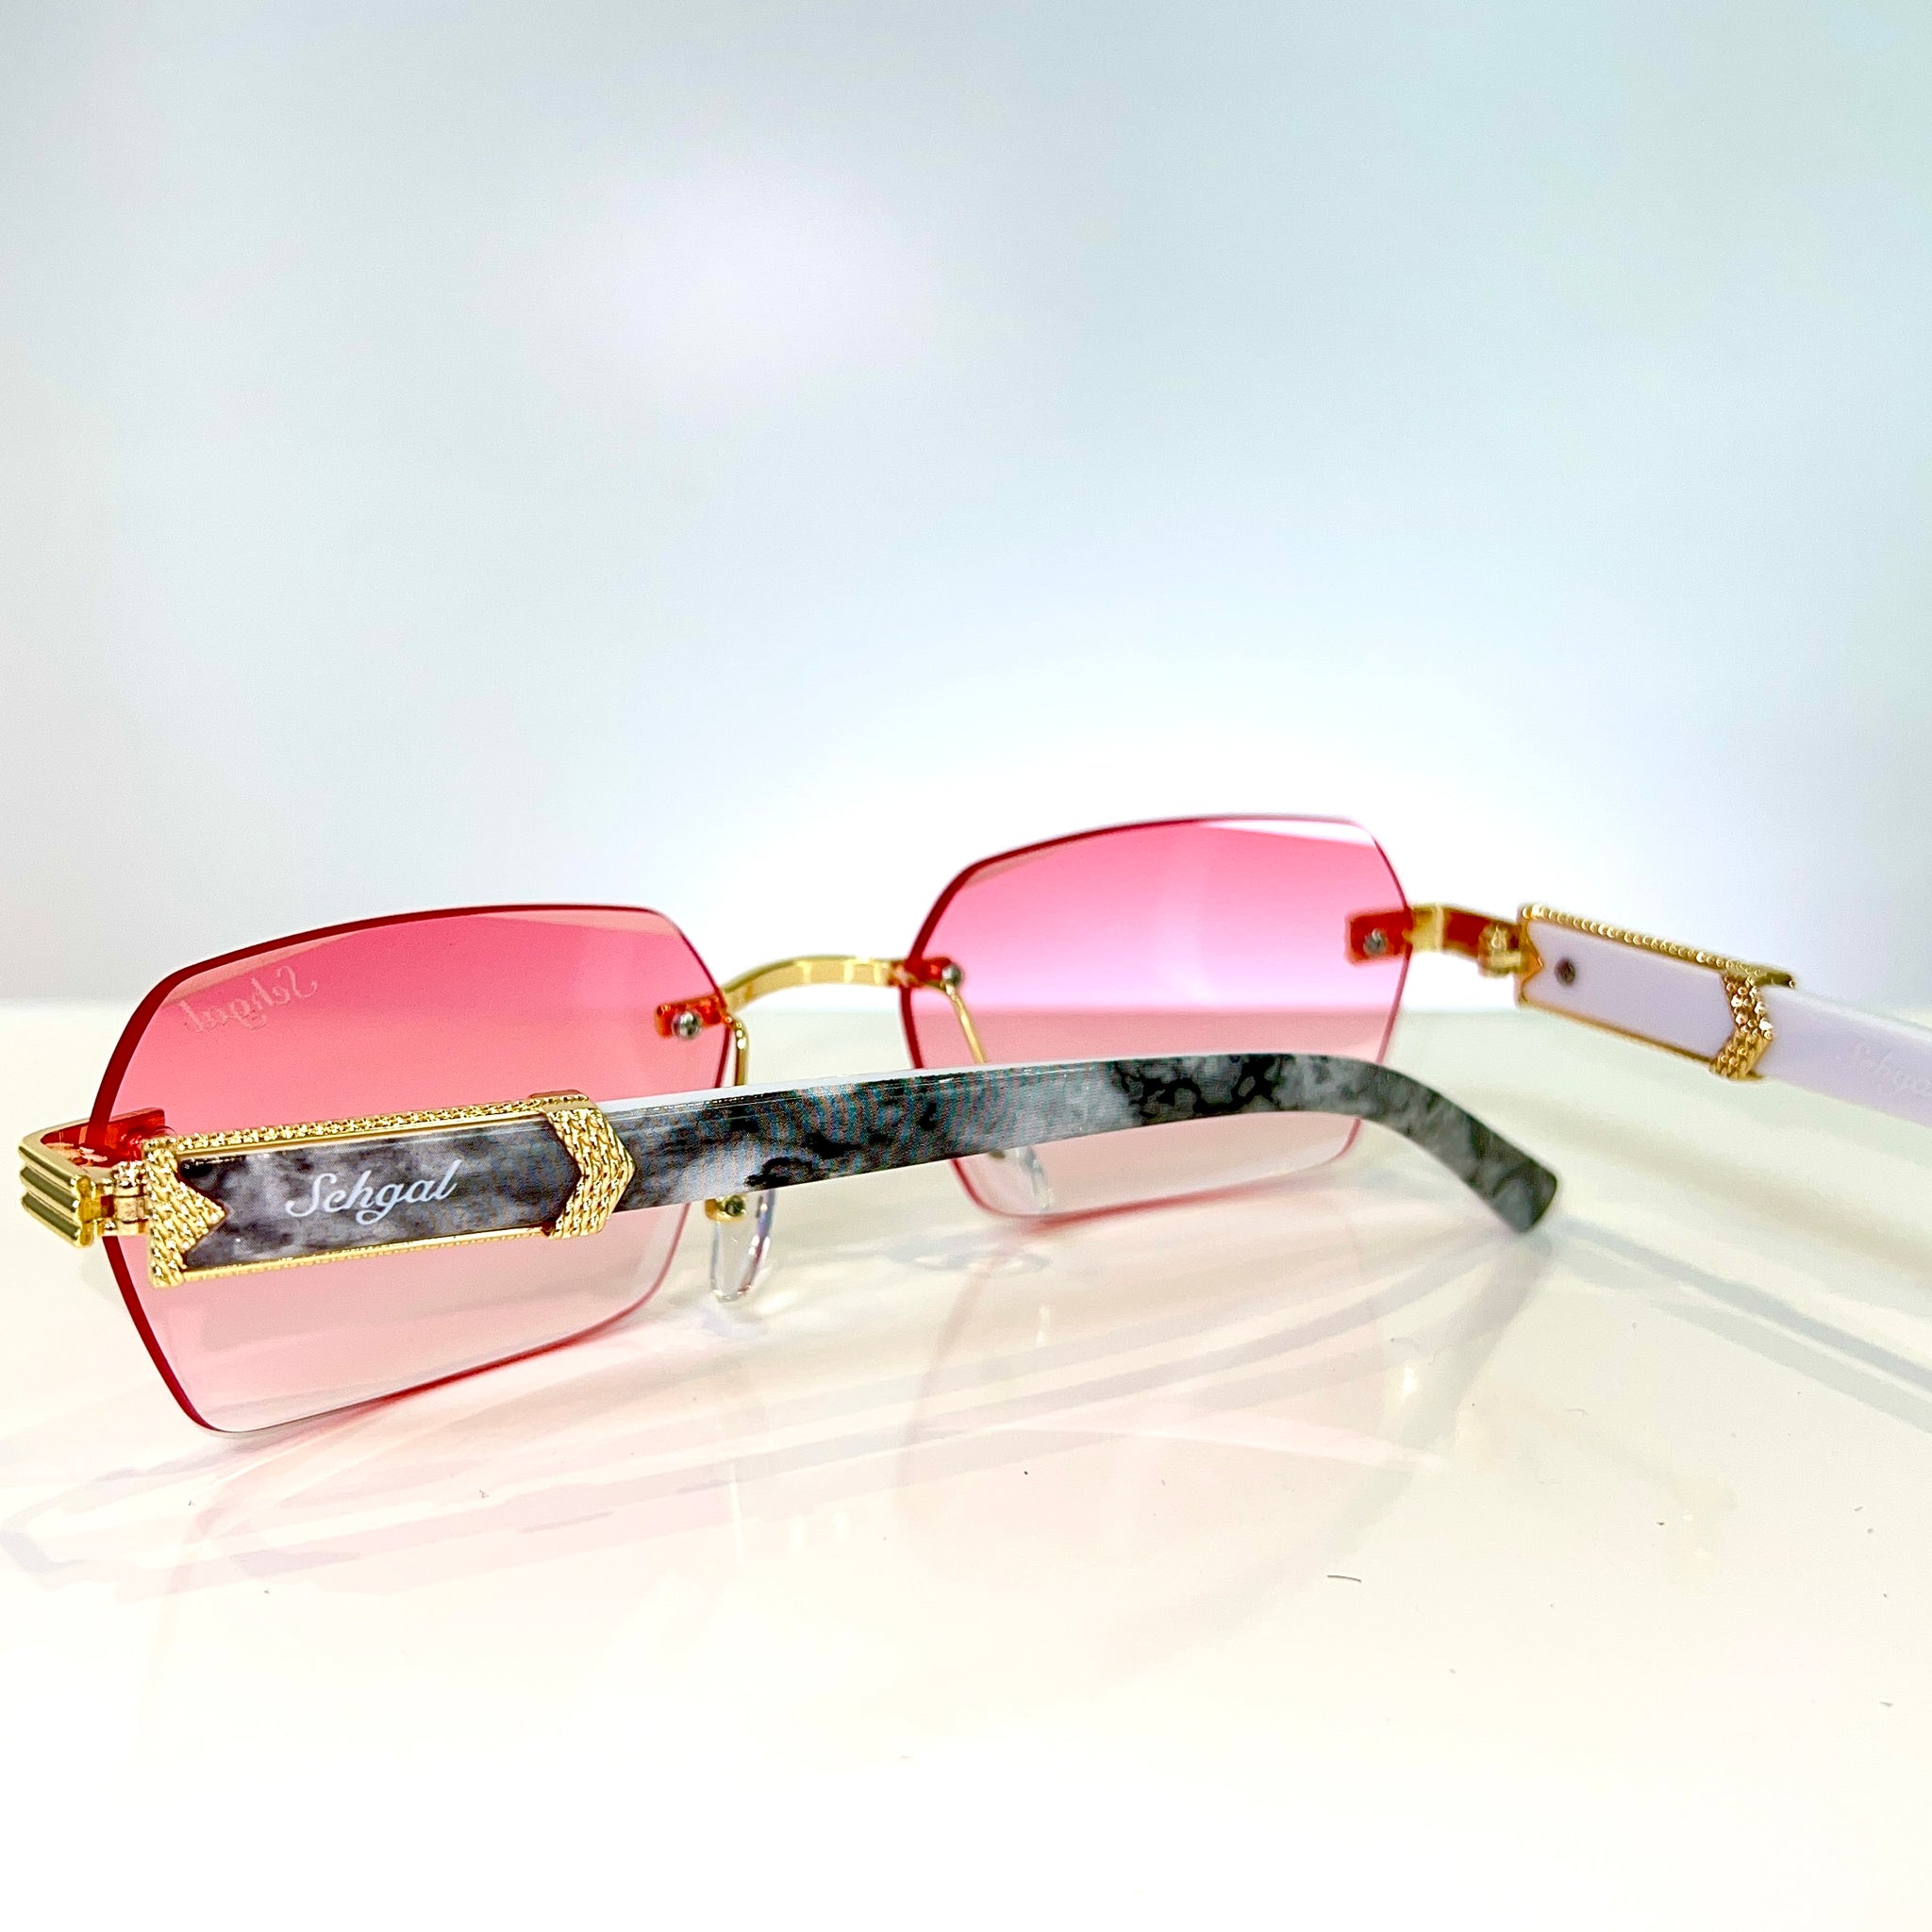 Marblecut Glasses - Pink Shade